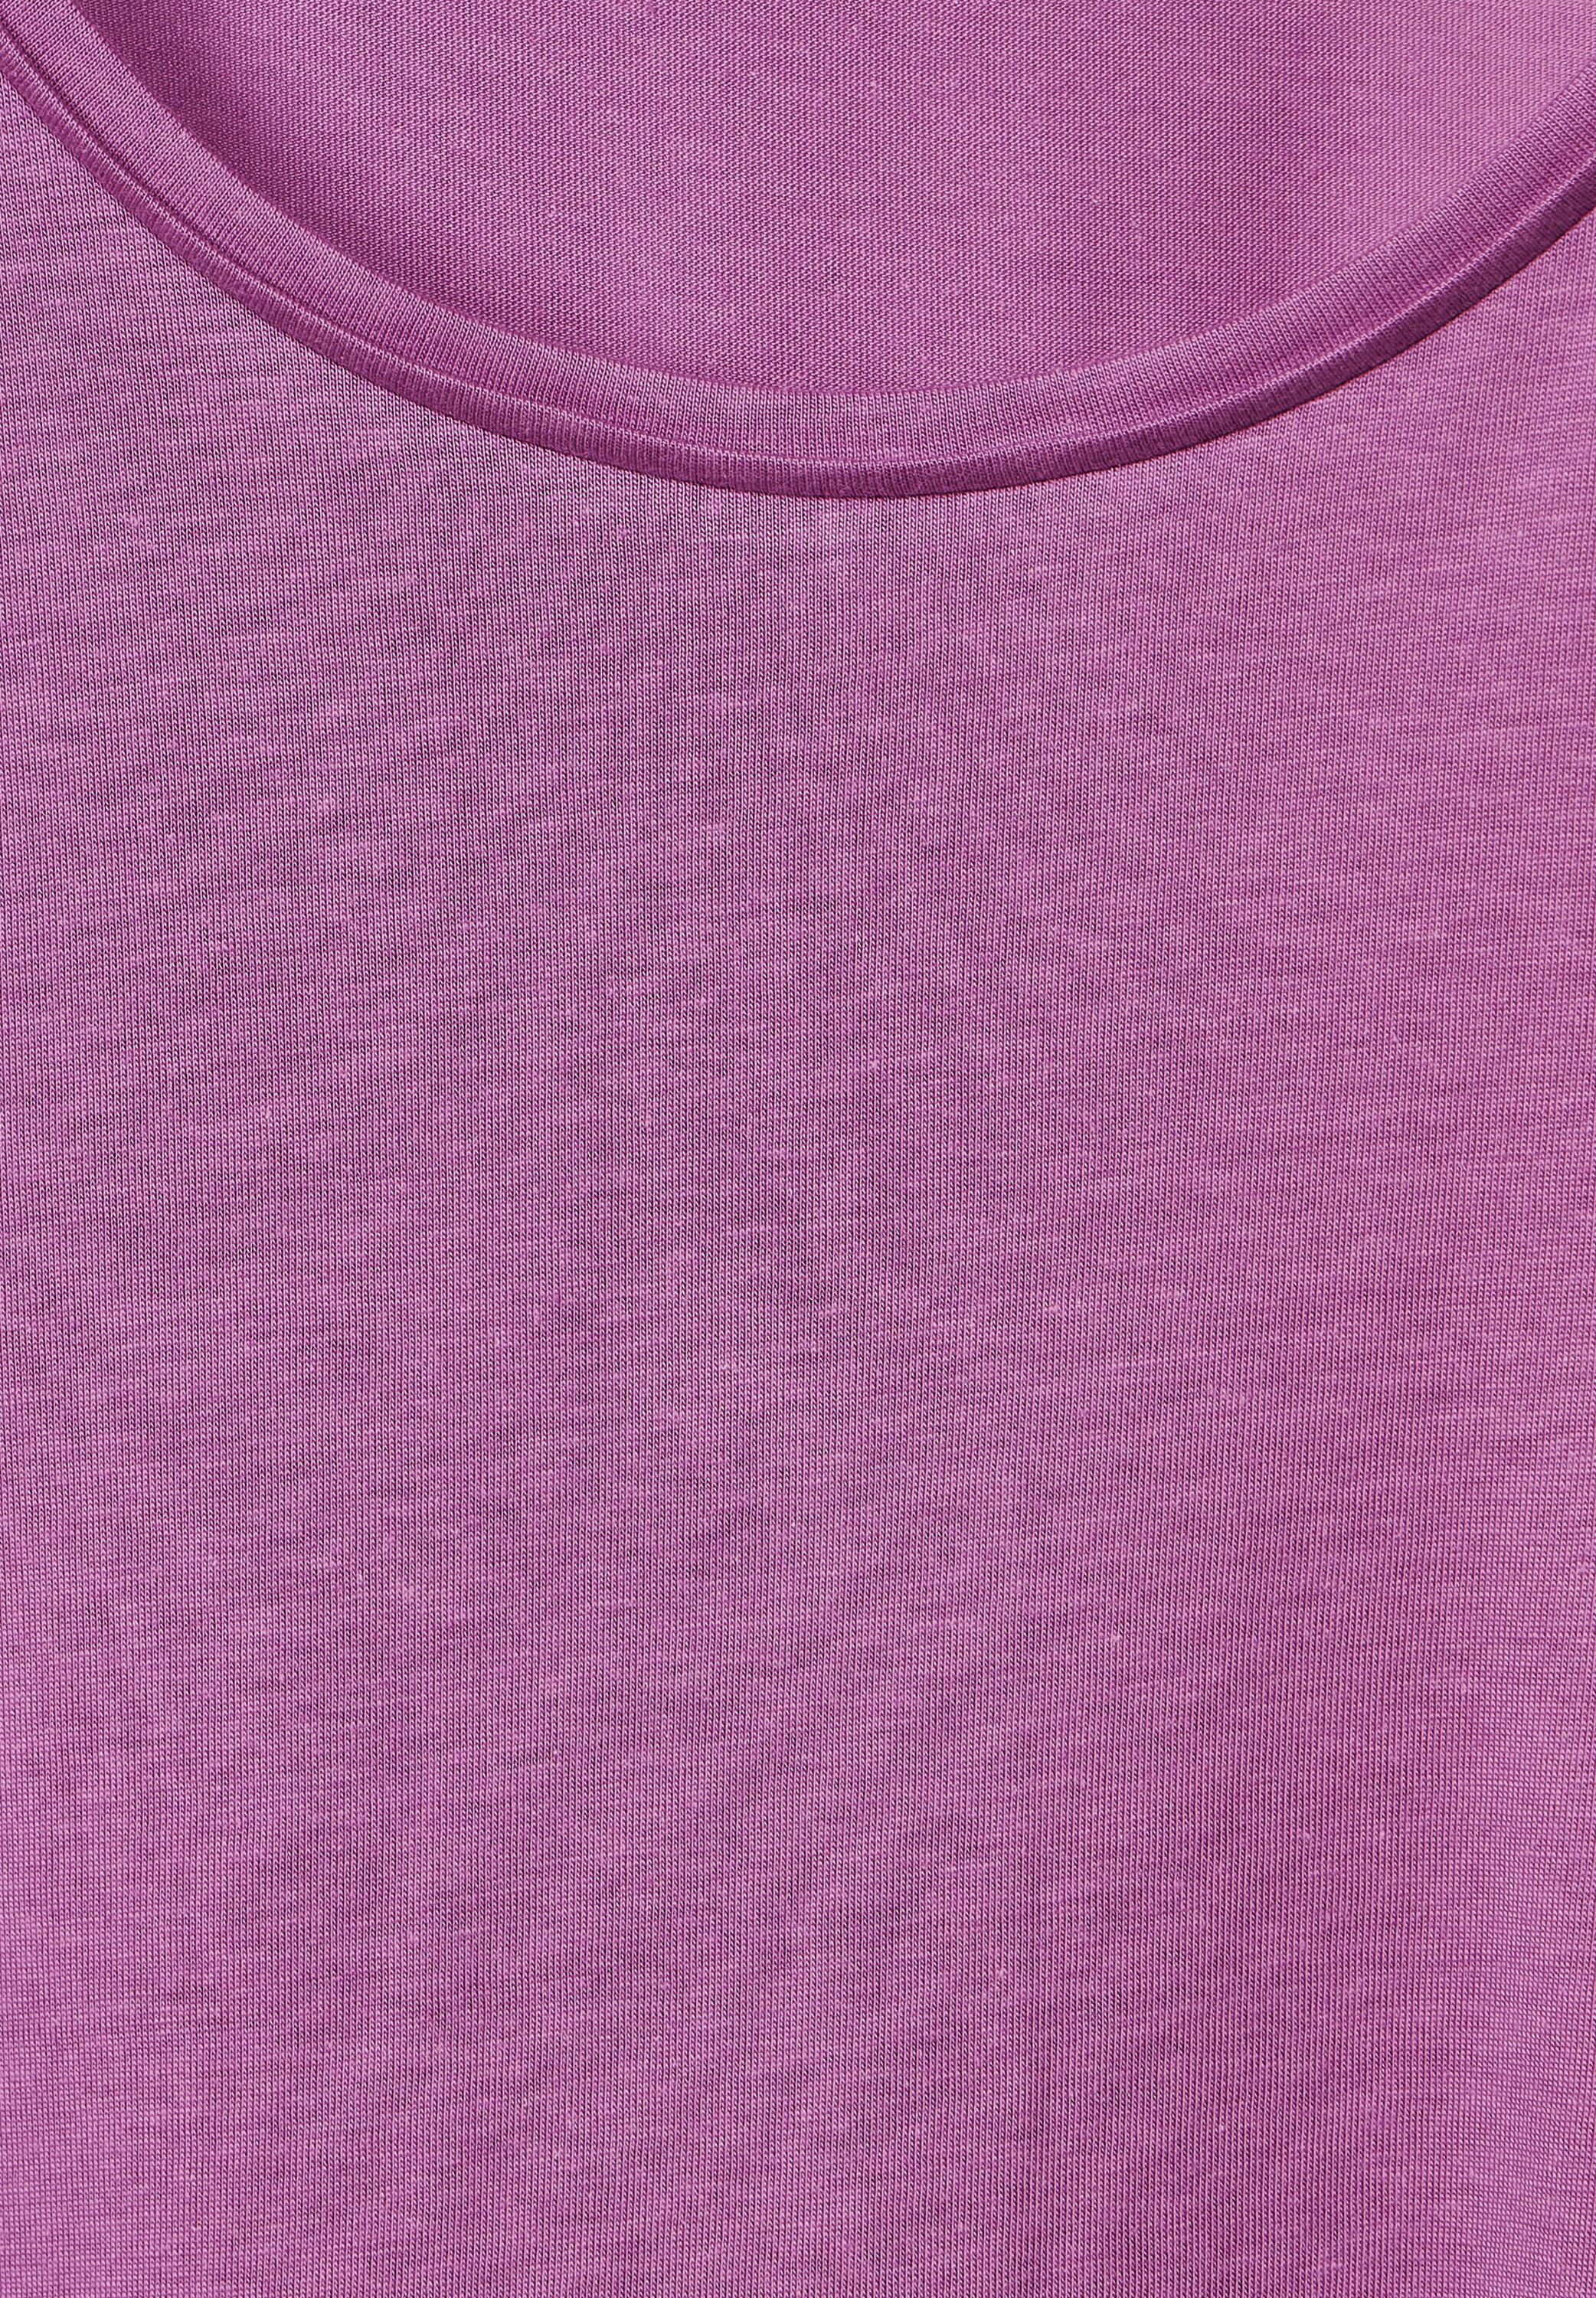 meta STREET Unifarbe ONE in T-Shirt lilac